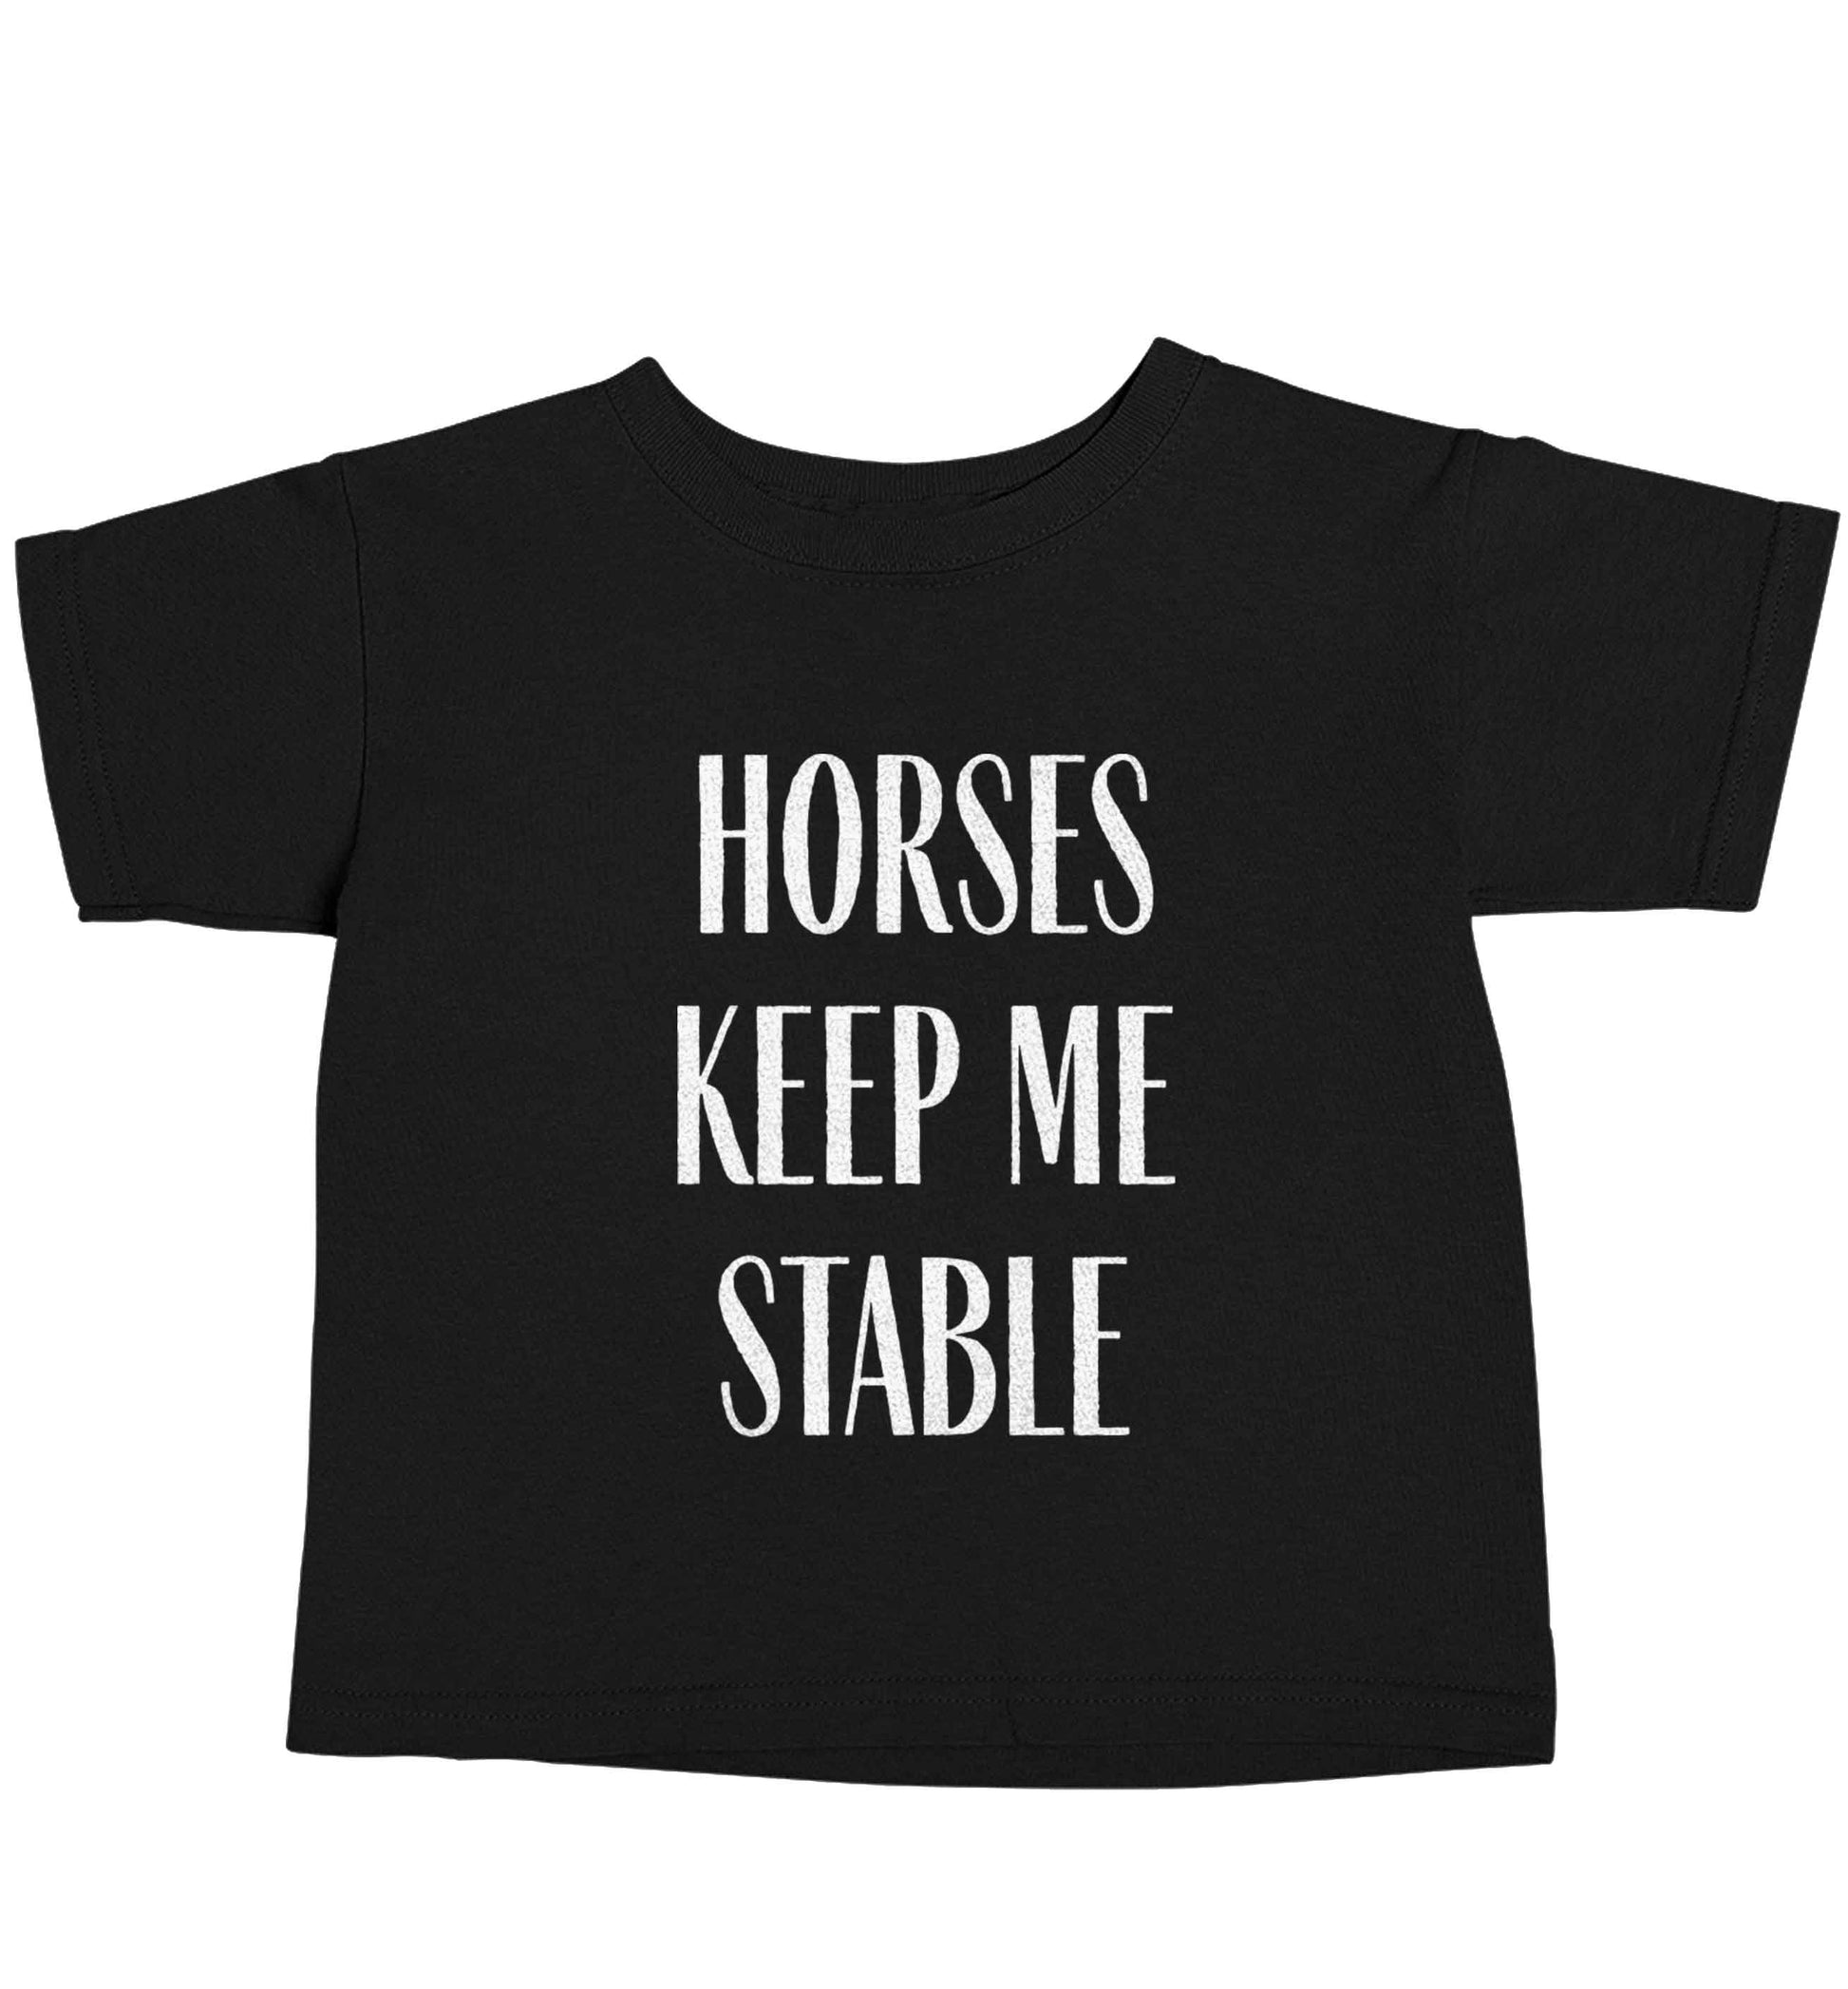 Horses keep me stable Black baby toddler Tshirt 2 years